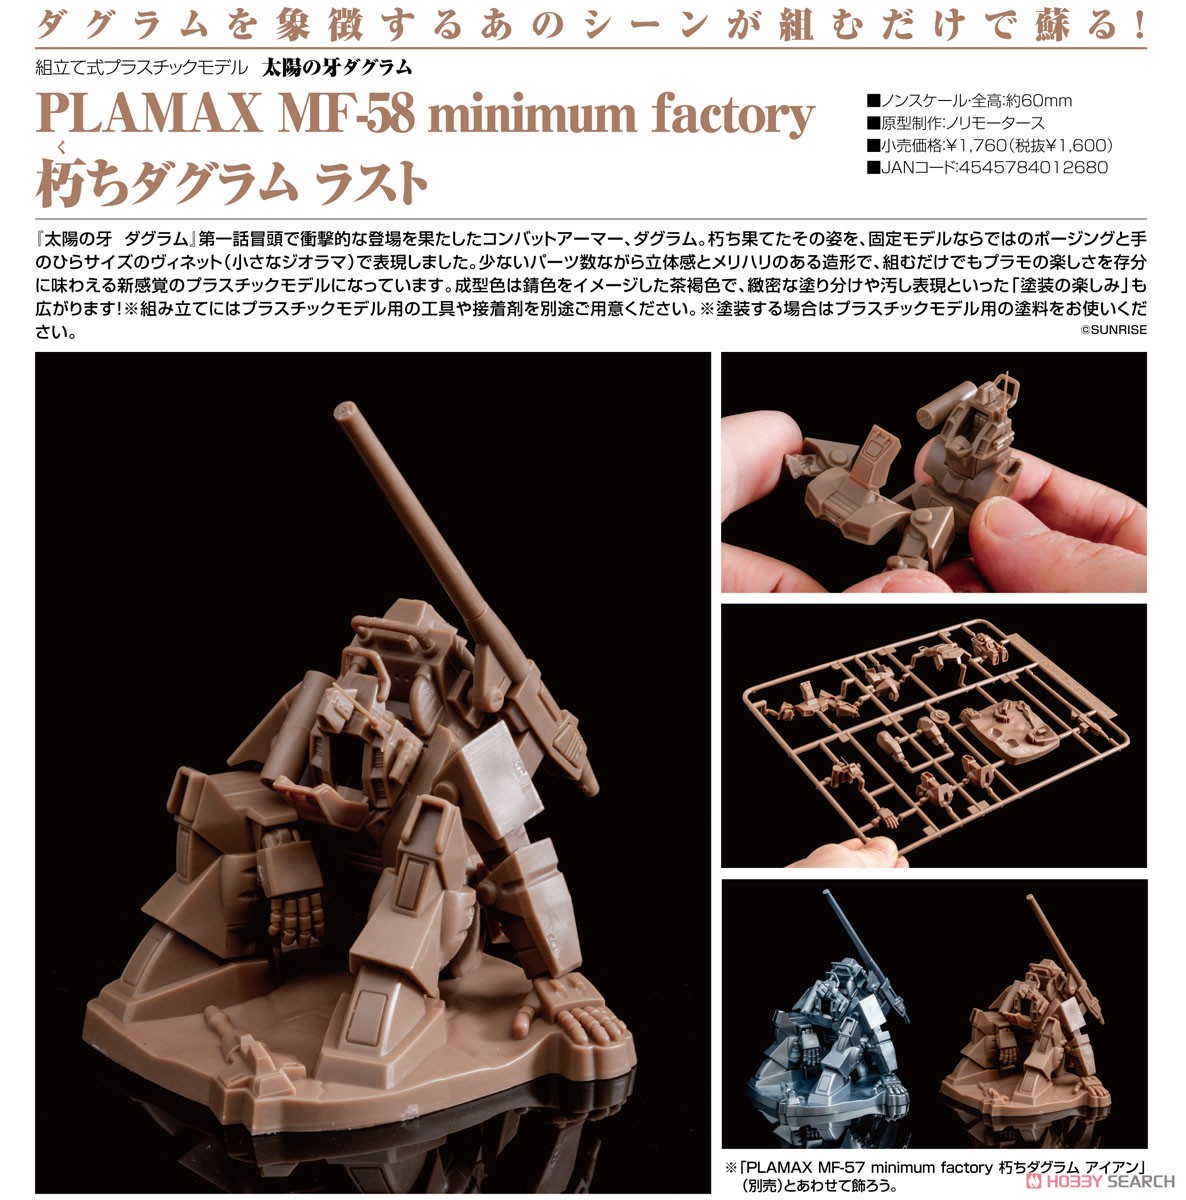 PLAMAX MF-58 minimum factory『朽ちダグラム ラスト』太陽の牙ダグラム 無可動プラモデル-013